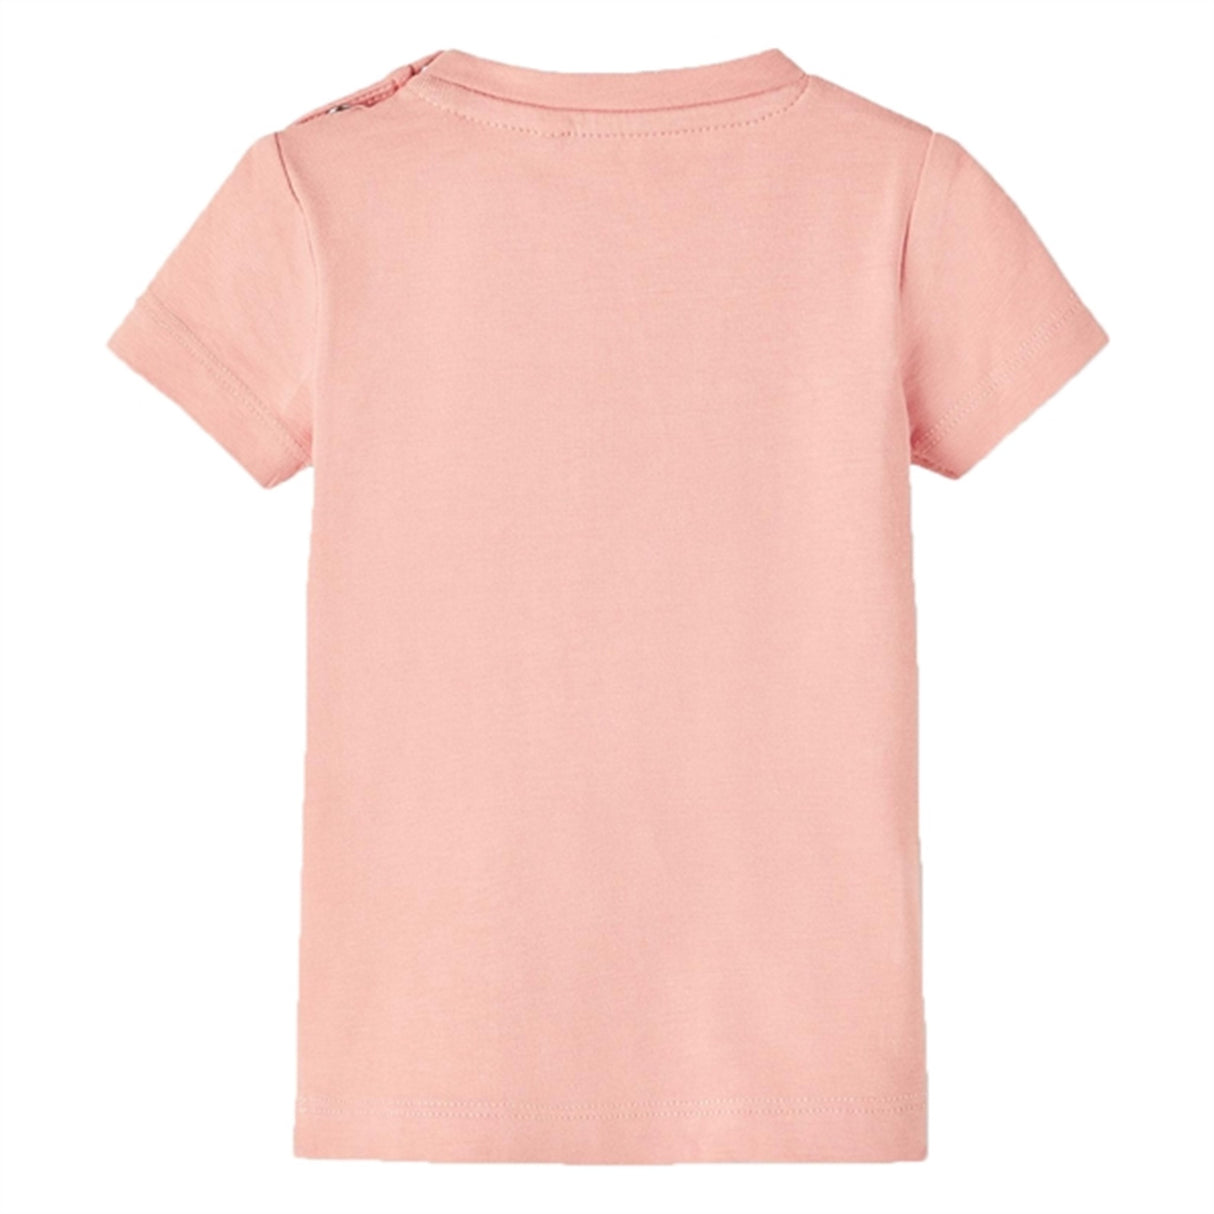 Name it Rose Tan Hessa T-Shirt 3